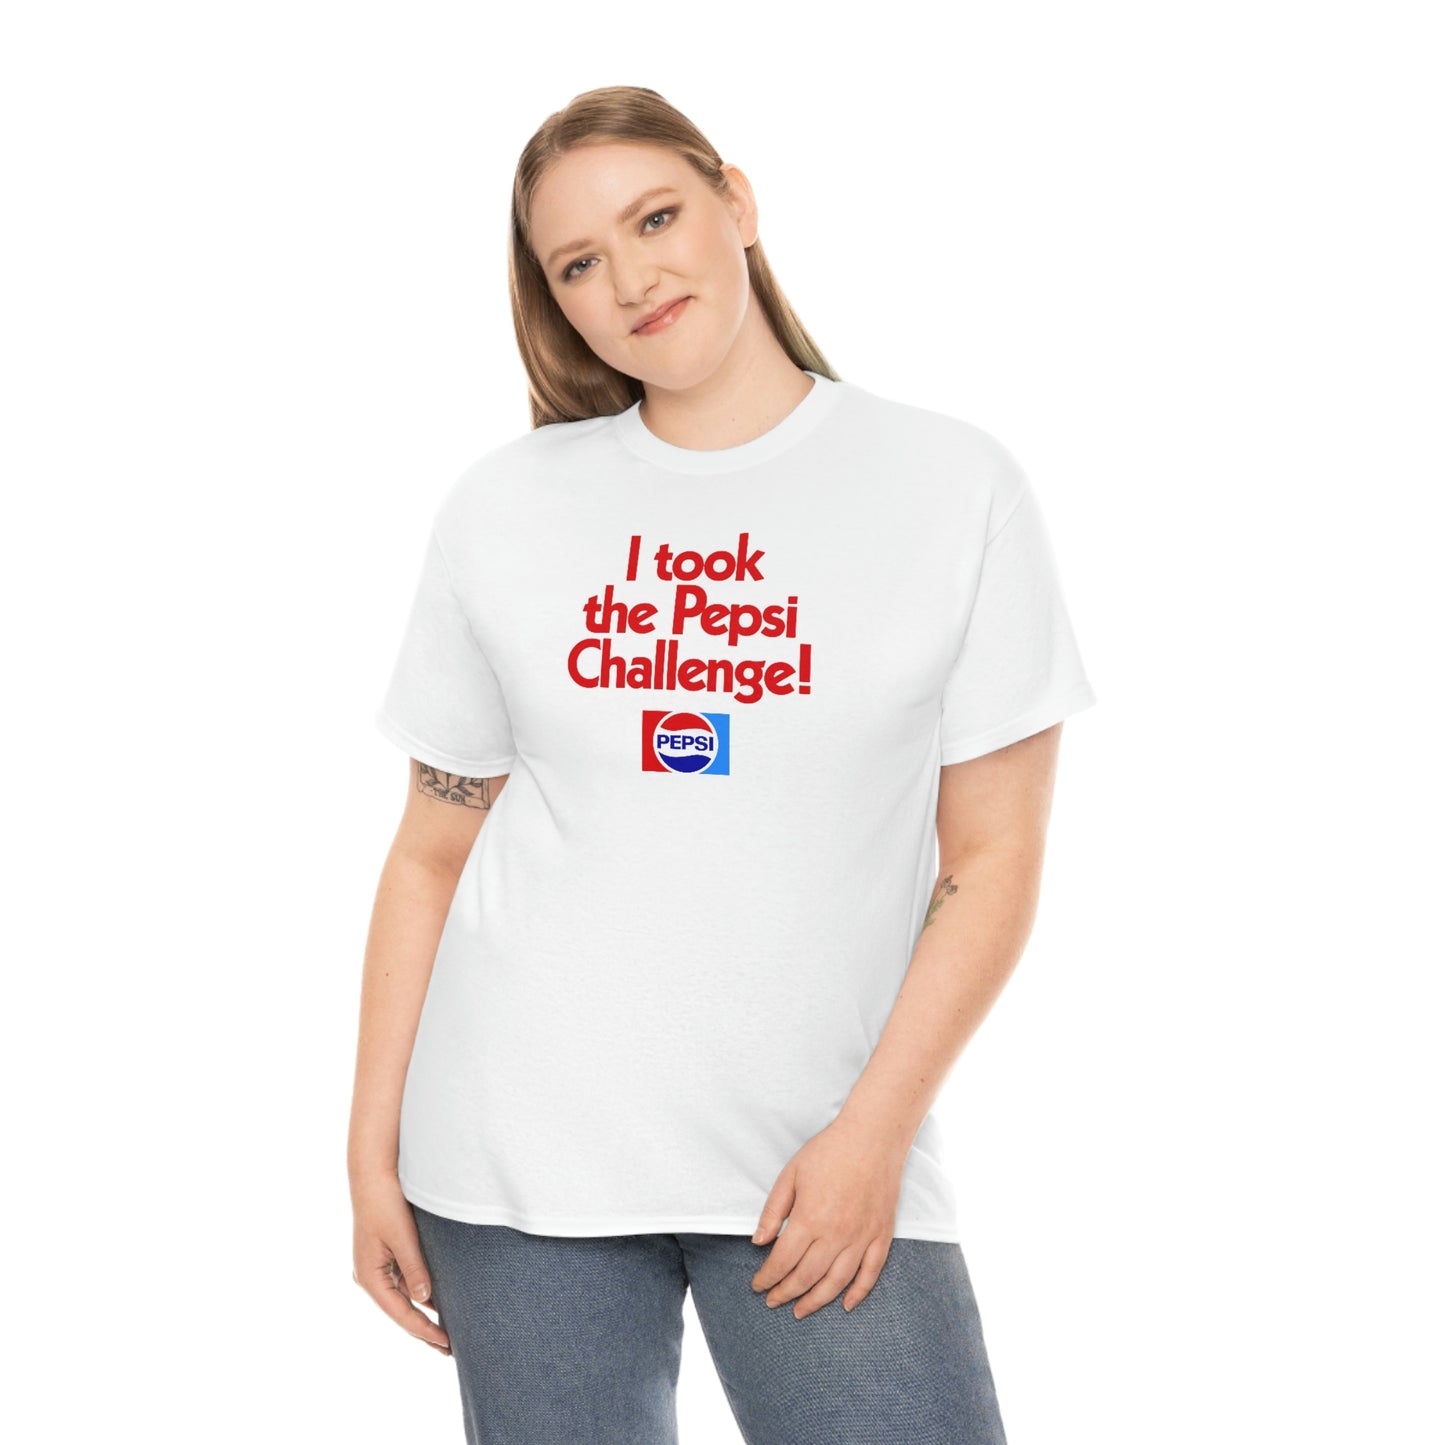 Pepsi Challenge T-Shirt